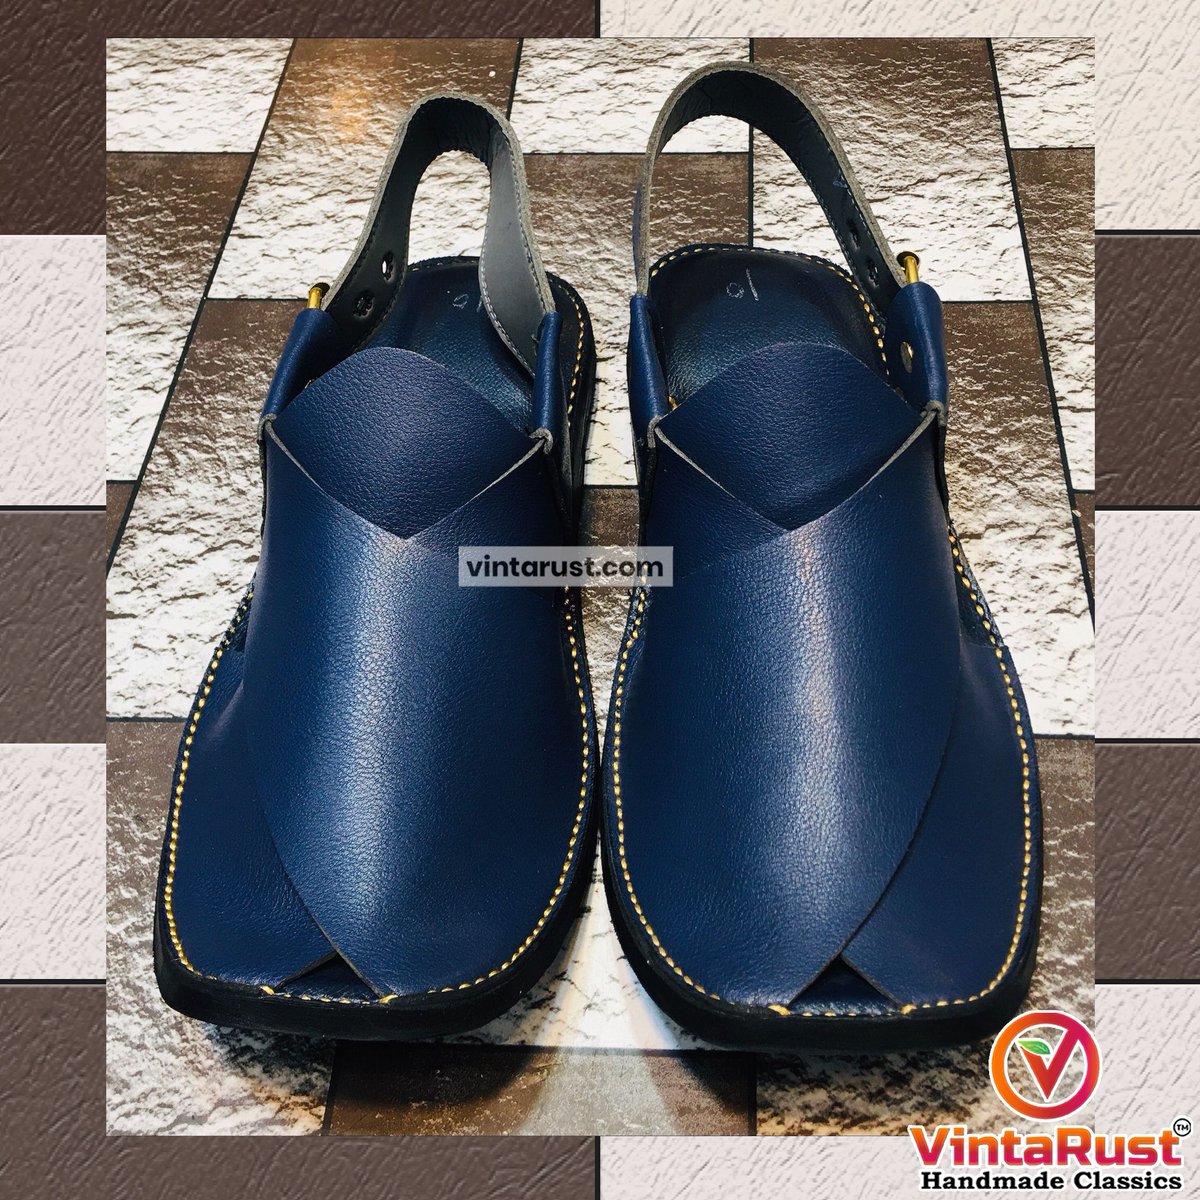 Handmade Blue Peshawari Sandals!

Shop now: buff.ly/3RBFJRe

#peshawarichappals #menssandals #leathersandals #handmade #festivalfashion #summershoes #comfortshoes #standoutshoes #mensaccessories #shopsmall #mensfashion #ootd #mensstyle #summerootd #summervibes